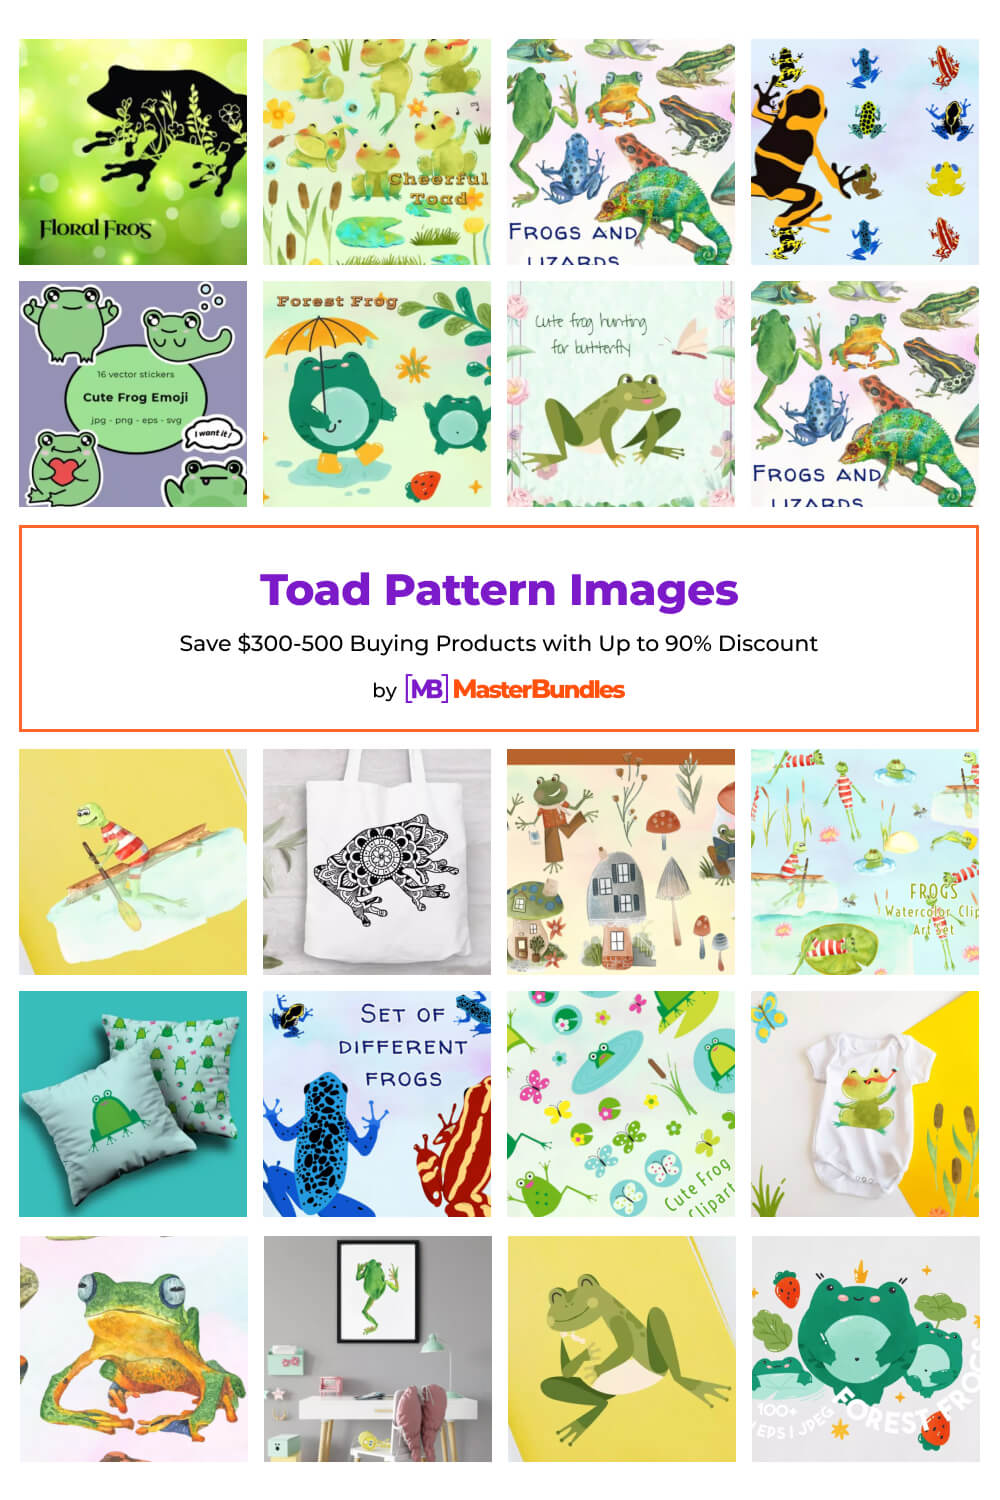 toad pattern images pinterest image.